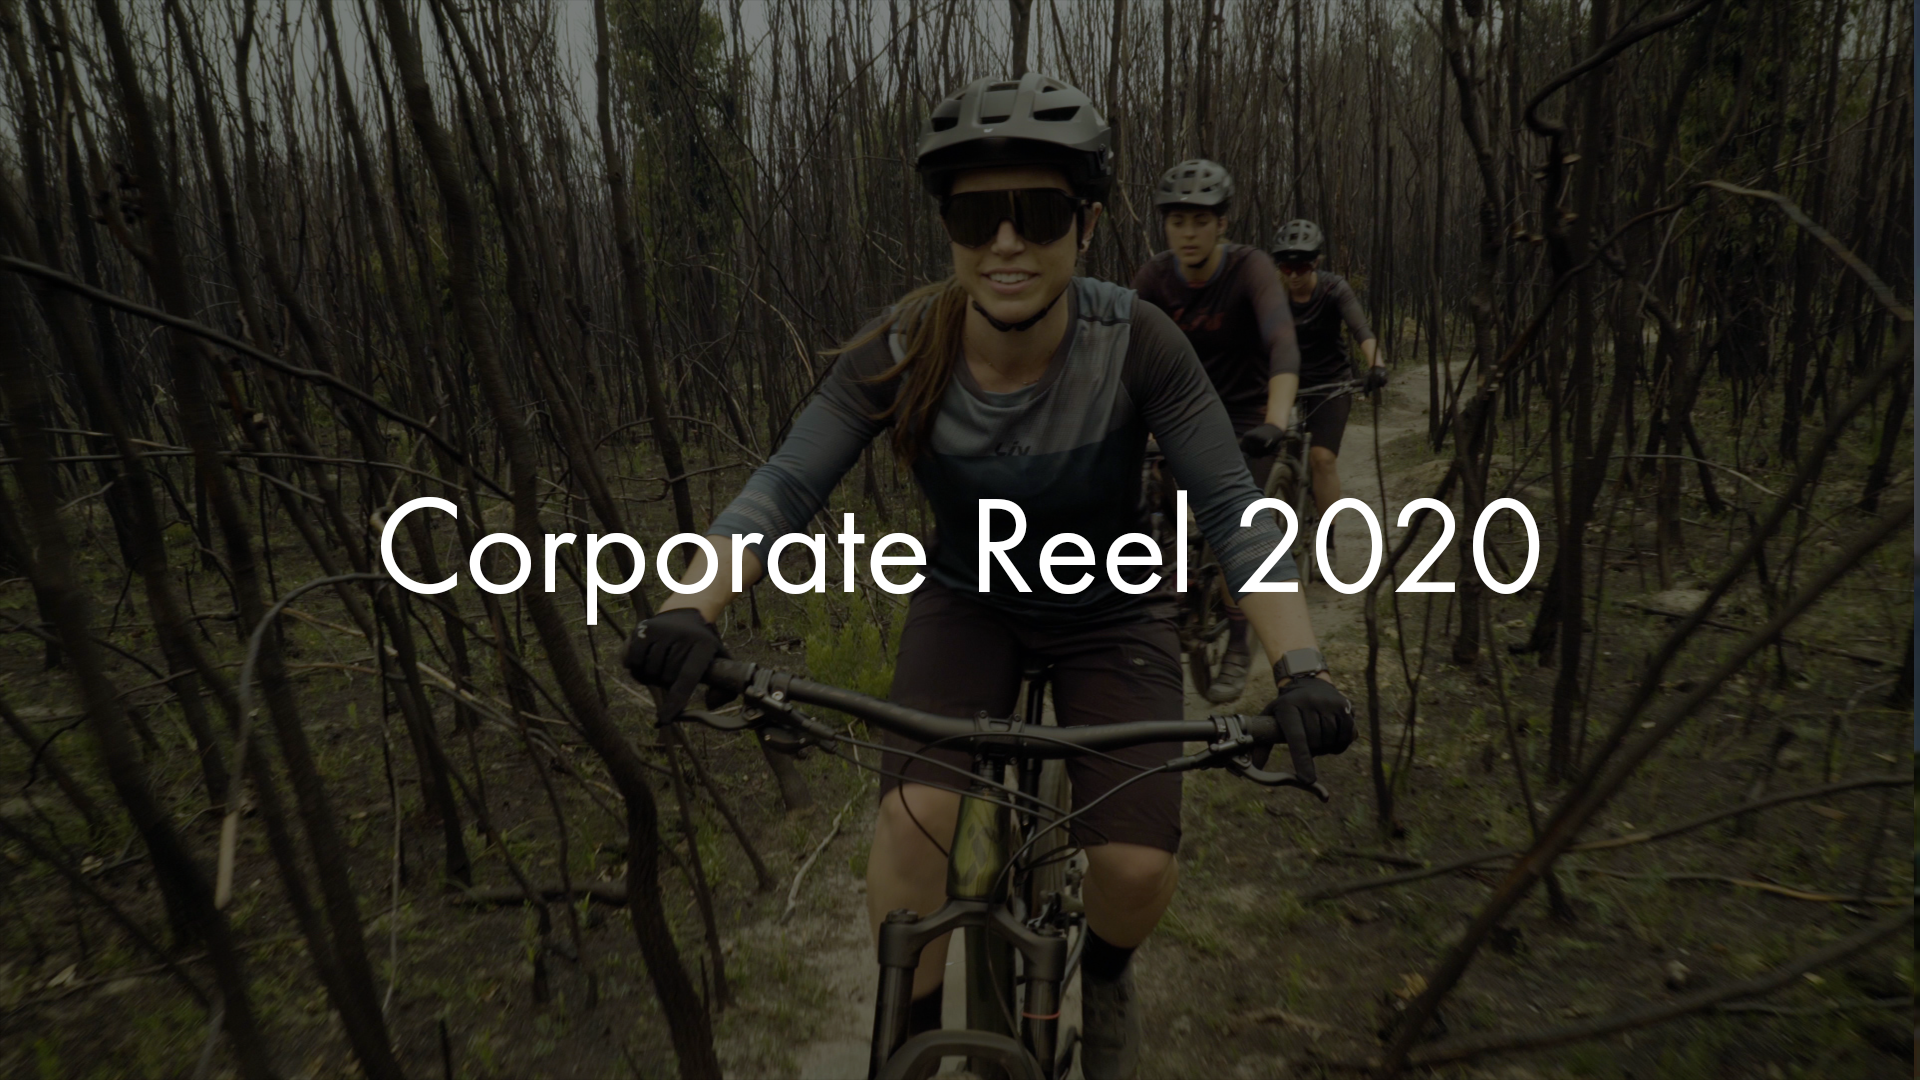 Corporate Reel 2020